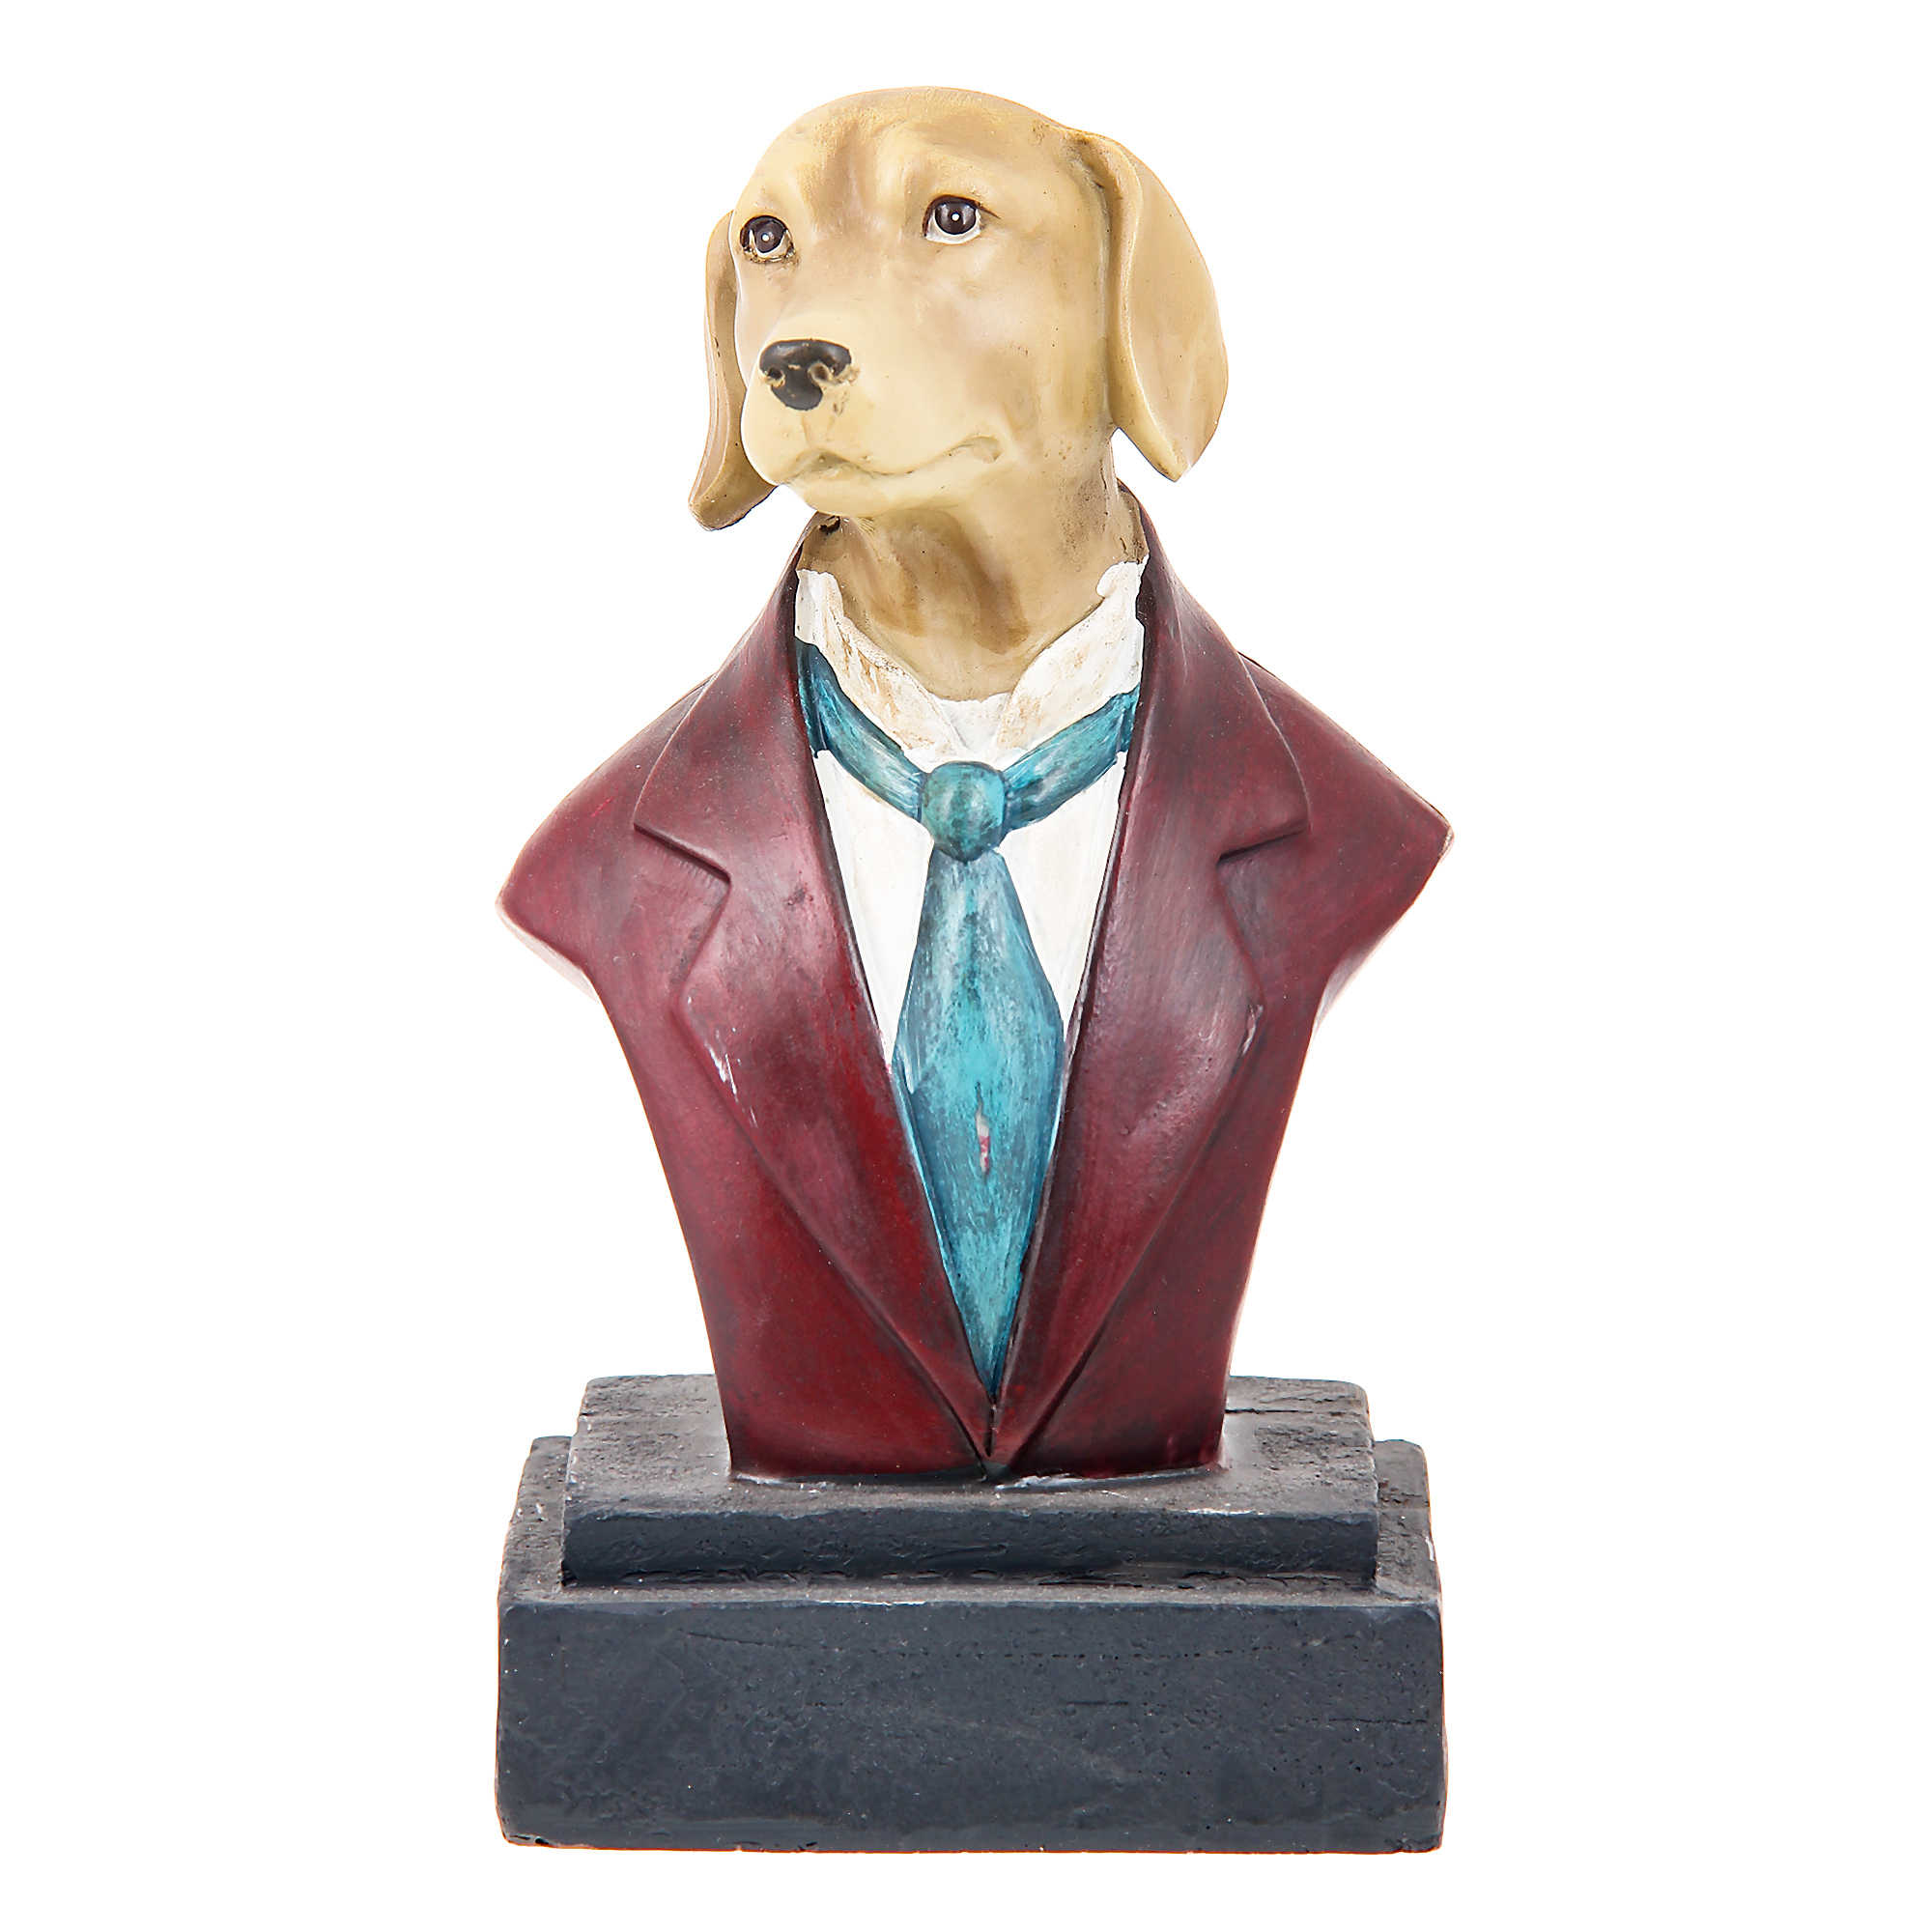 Декор Royal gifts бюст собаки в бордовом пиджаке бюст купидона glasar 16х13х24 см